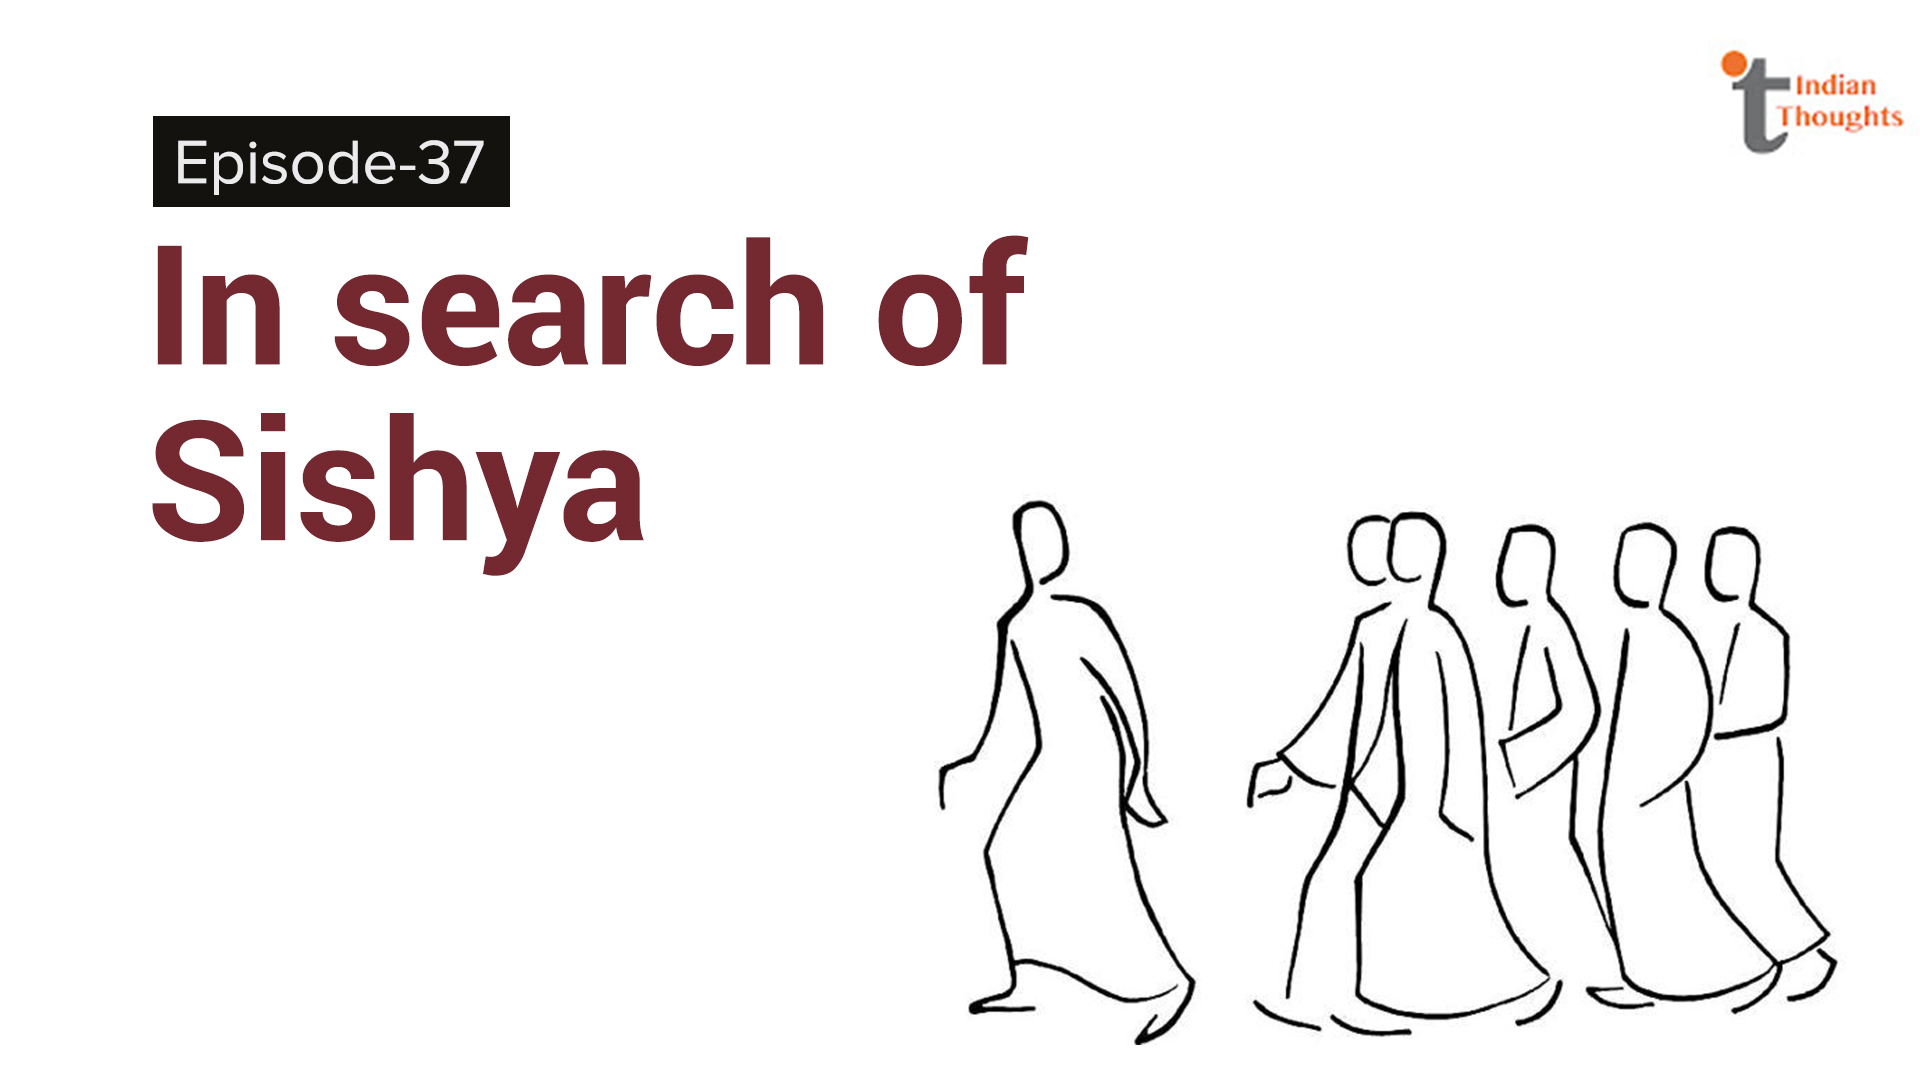 In search of sishya